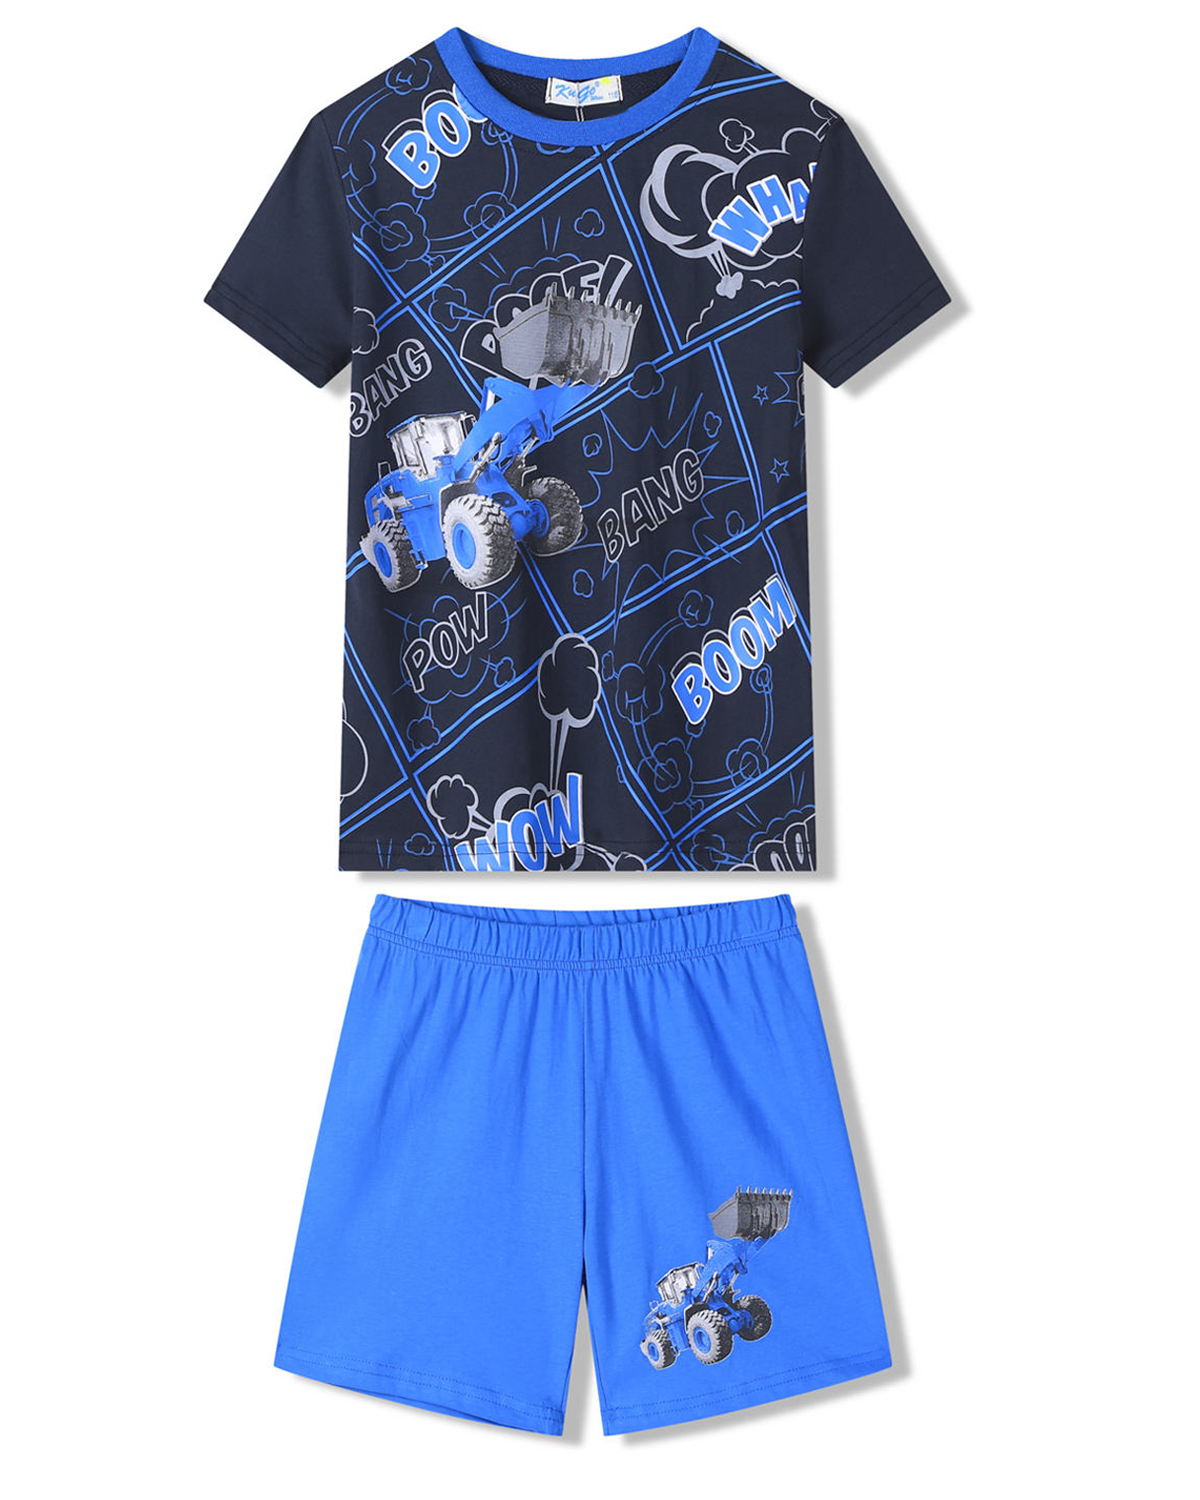 Chlapecké pyžamo - KUGO WT7310, tmavě modrá Barva: Modrá tmavě, Velikost: 122